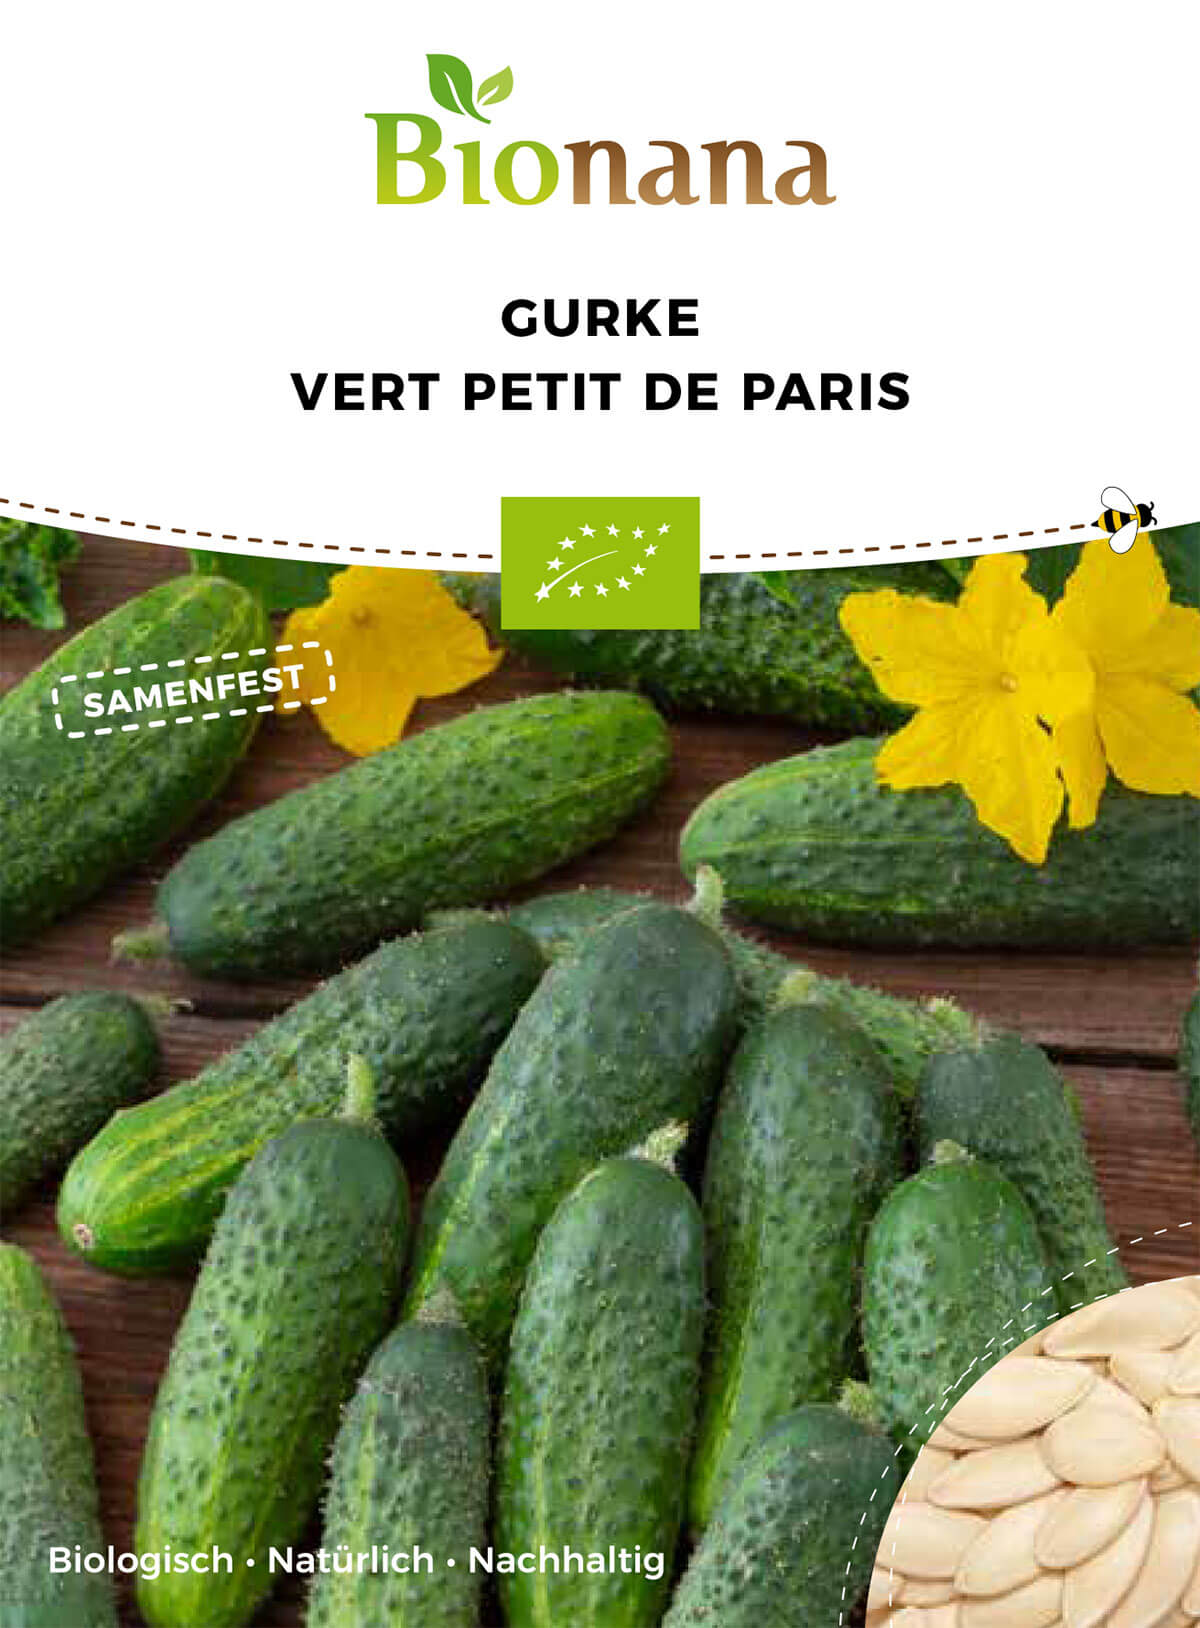 Gurke Vert Petit de Paris | BIO Gurkensamen von Bionana